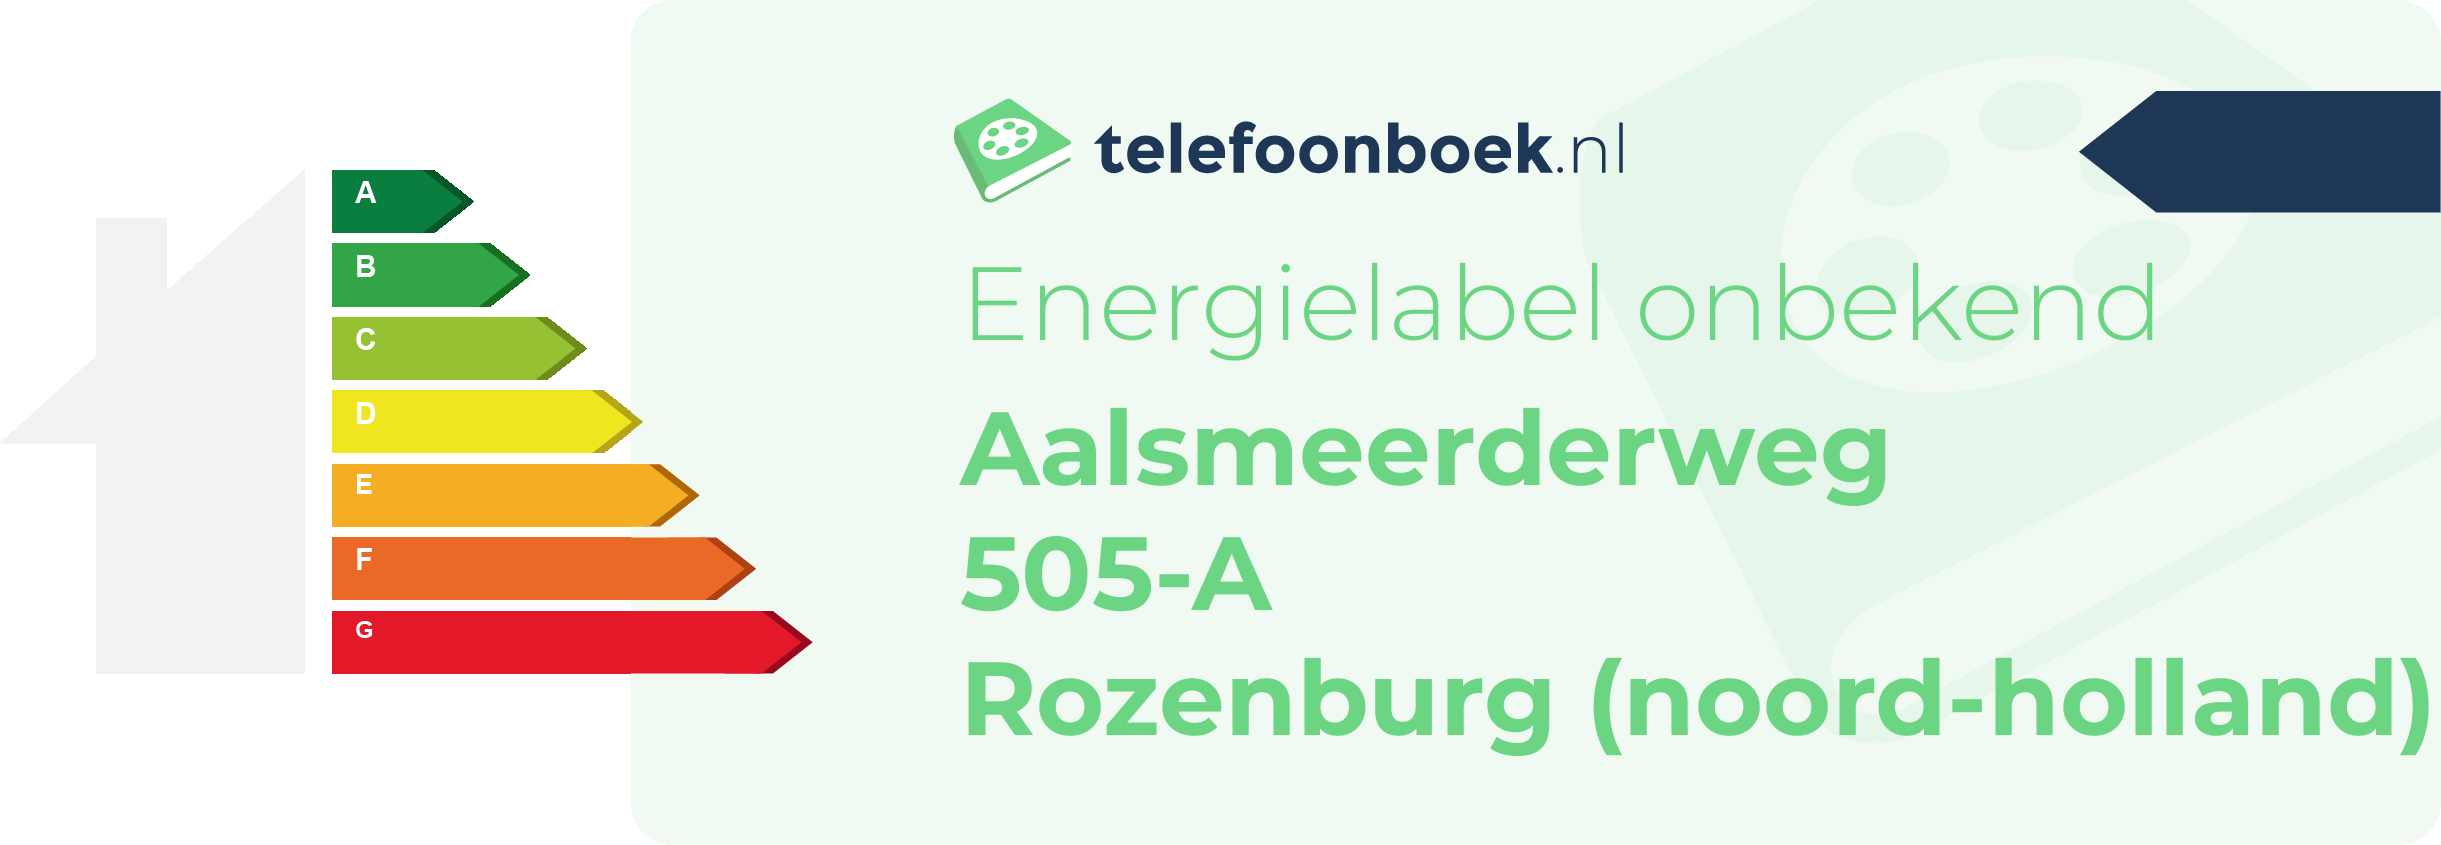 Energielabel Aalsmeerderweg 505-A Rozenburg (Noord-Holland)